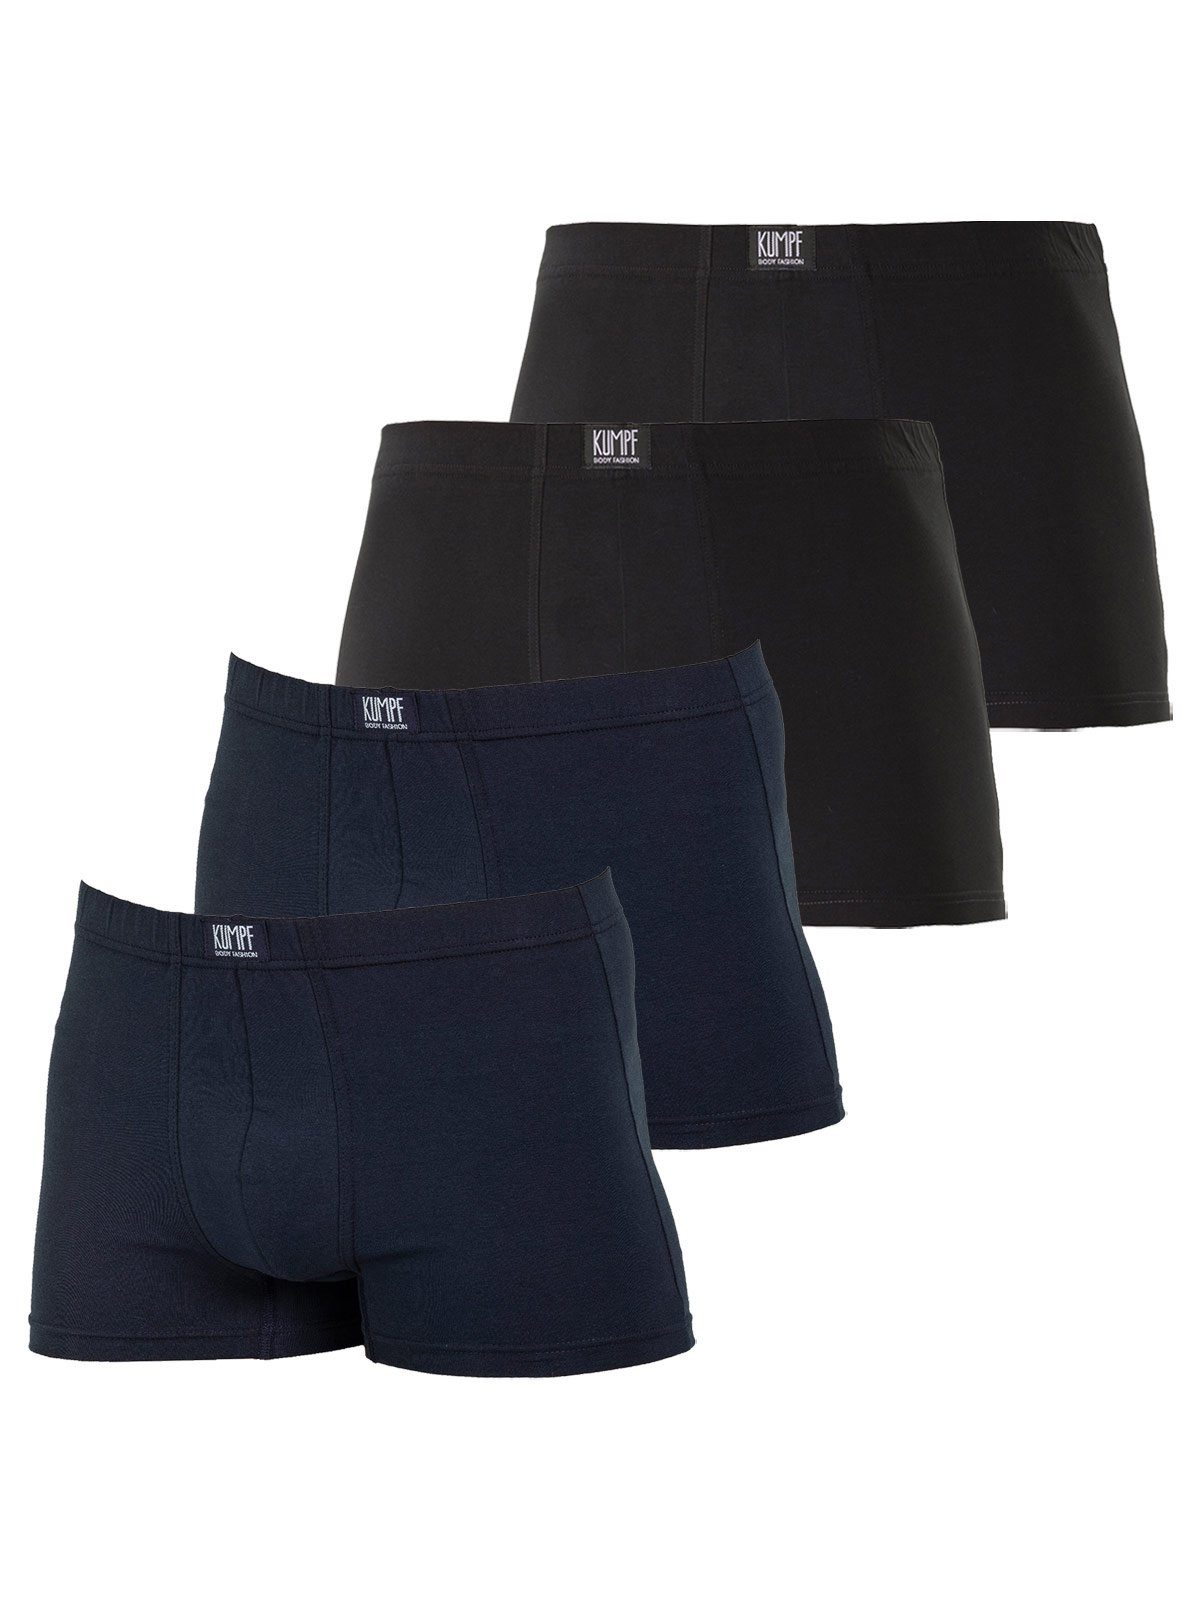 KUMPF Retro Pants 4er Sparpack Herren Pants Bio Cotton (Spar-Set, 4-St) hohe Markenqualität navy schwarz